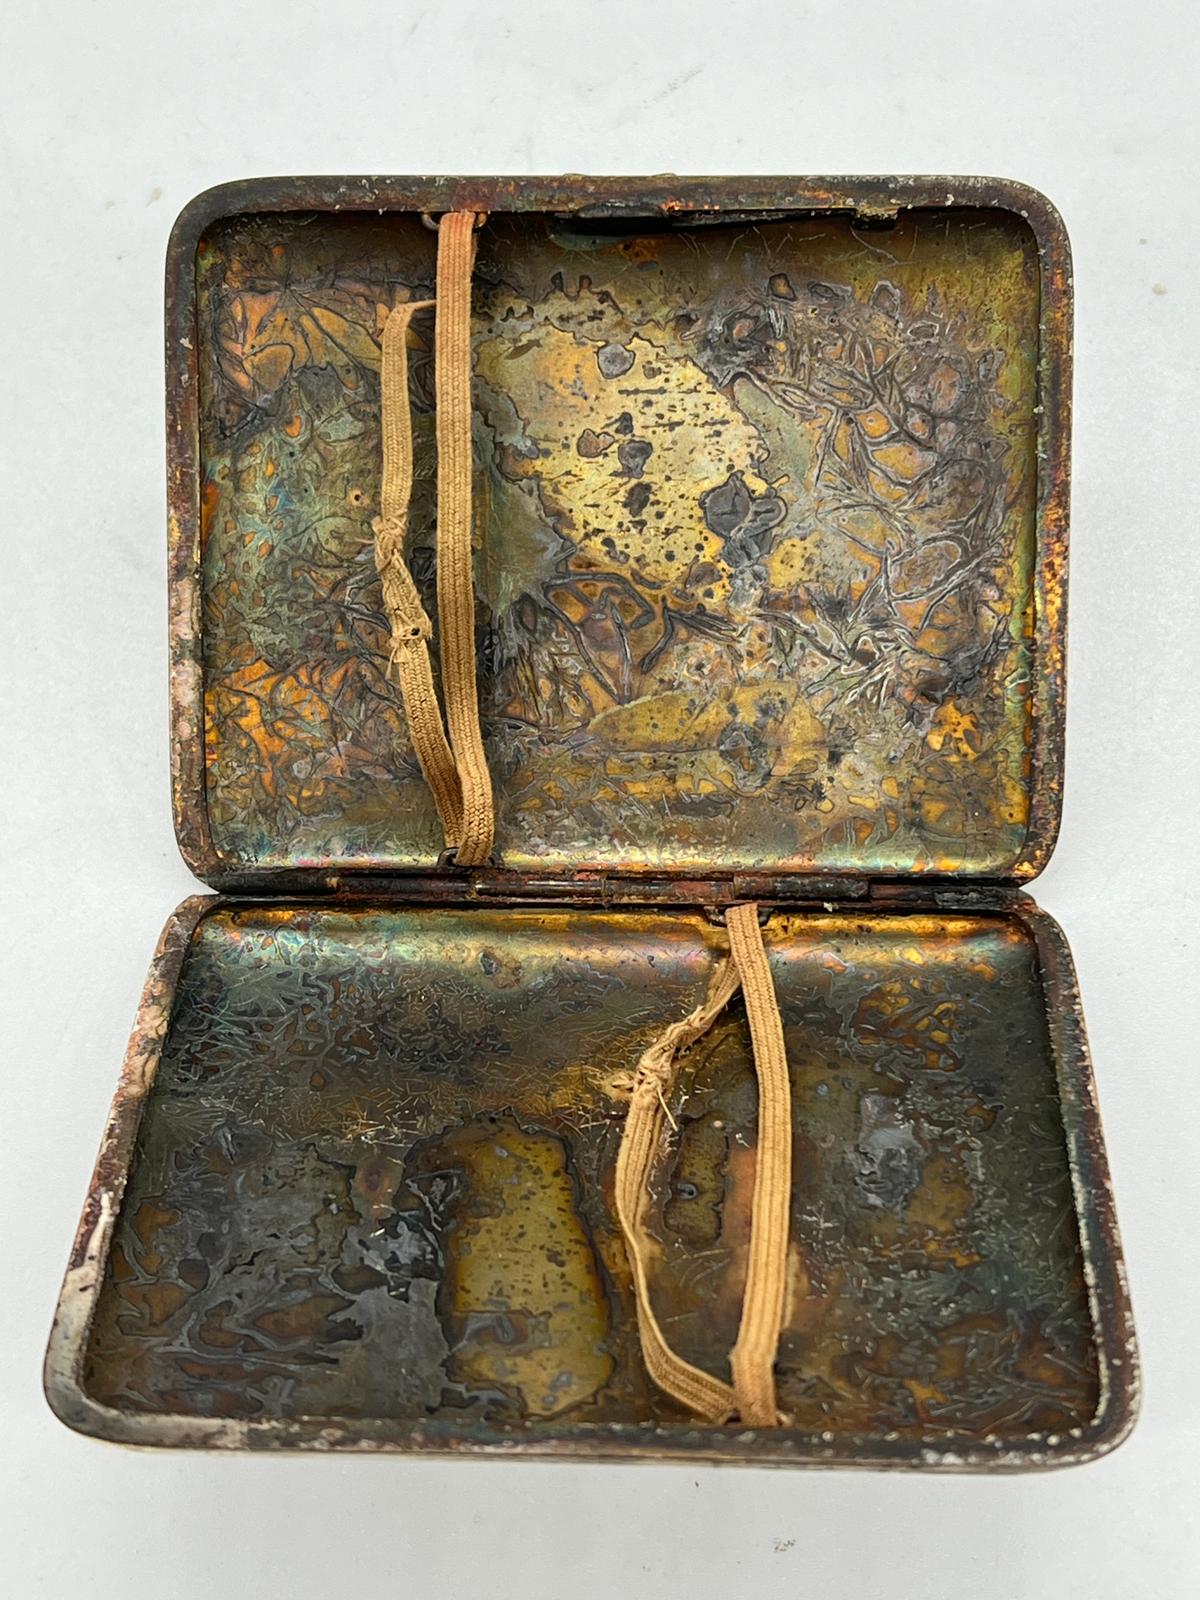 A white metal and enamel cigarette case (7cm x 9cm) - Image 3 of 3